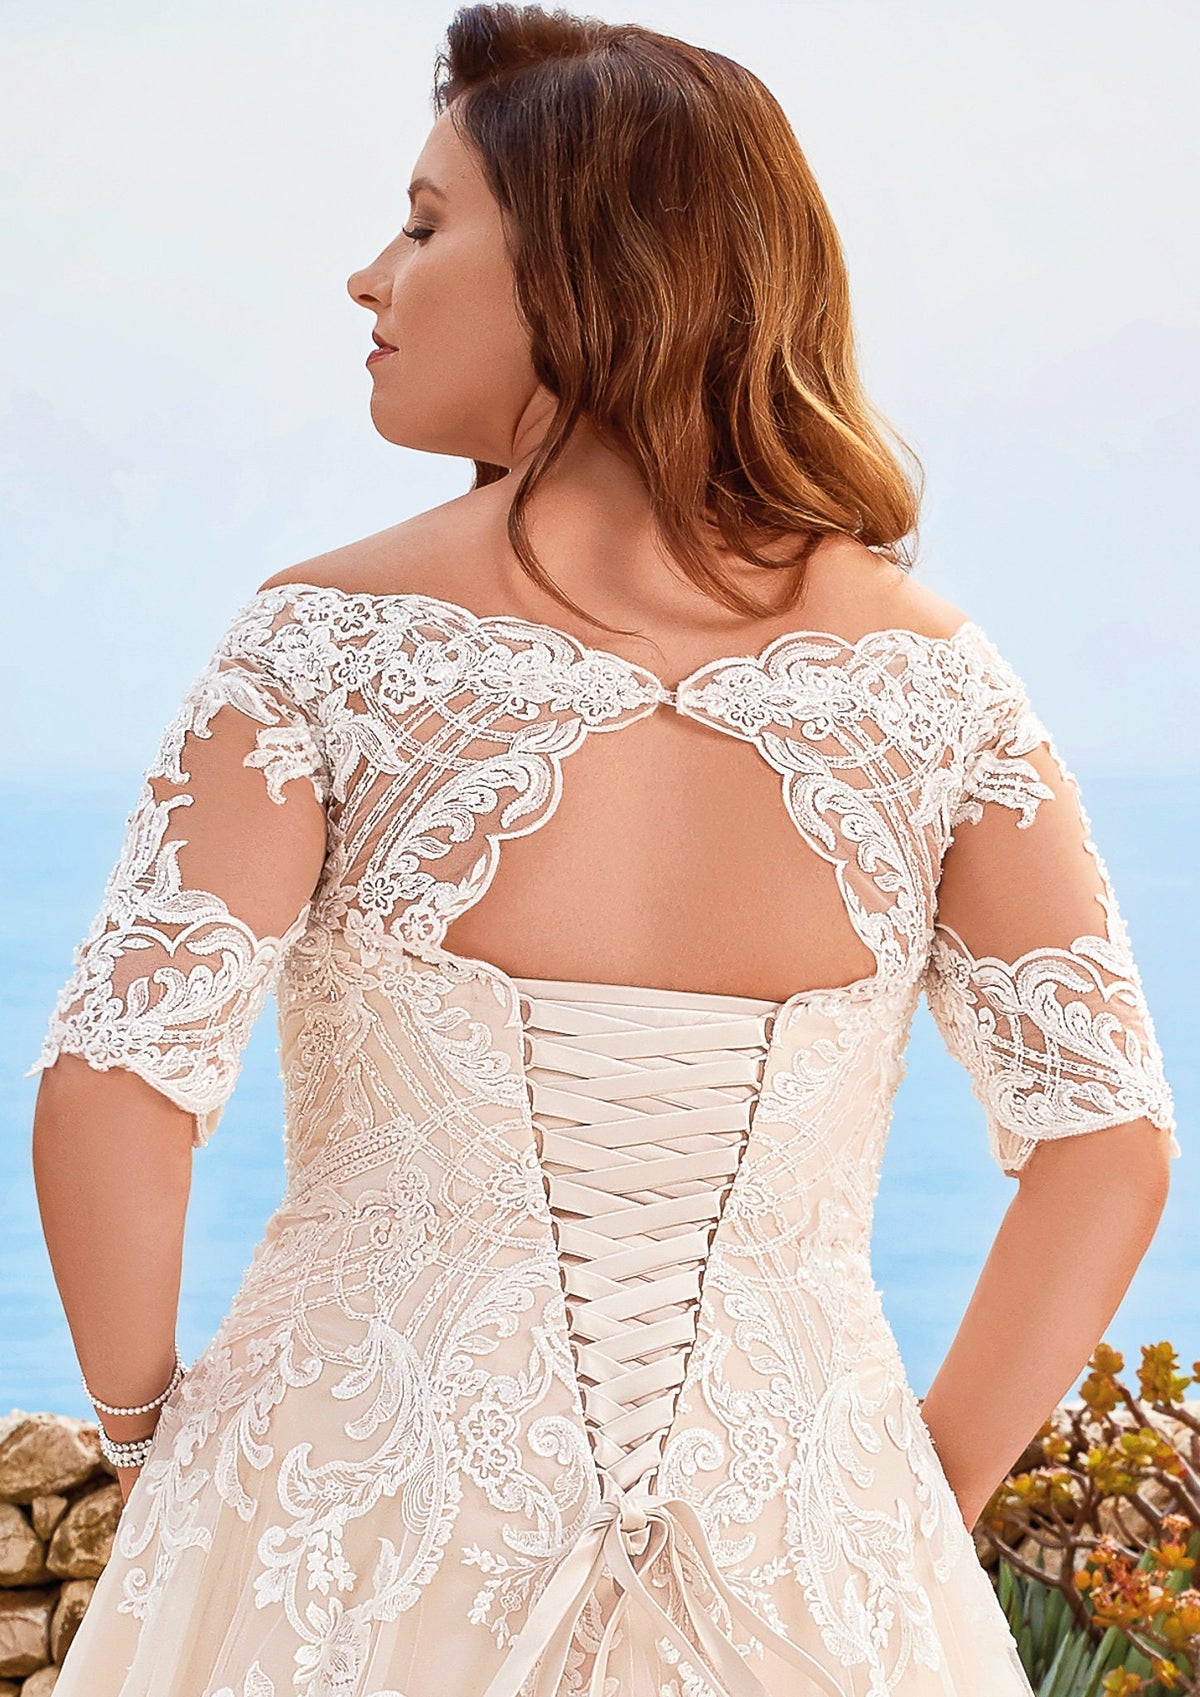 Classic Lace Bodice Short Sleeve Off The Shoulder Neckline Aline Wedding Dress Bridal Gown Ivory Blush Lace Up Corset Romantic Design